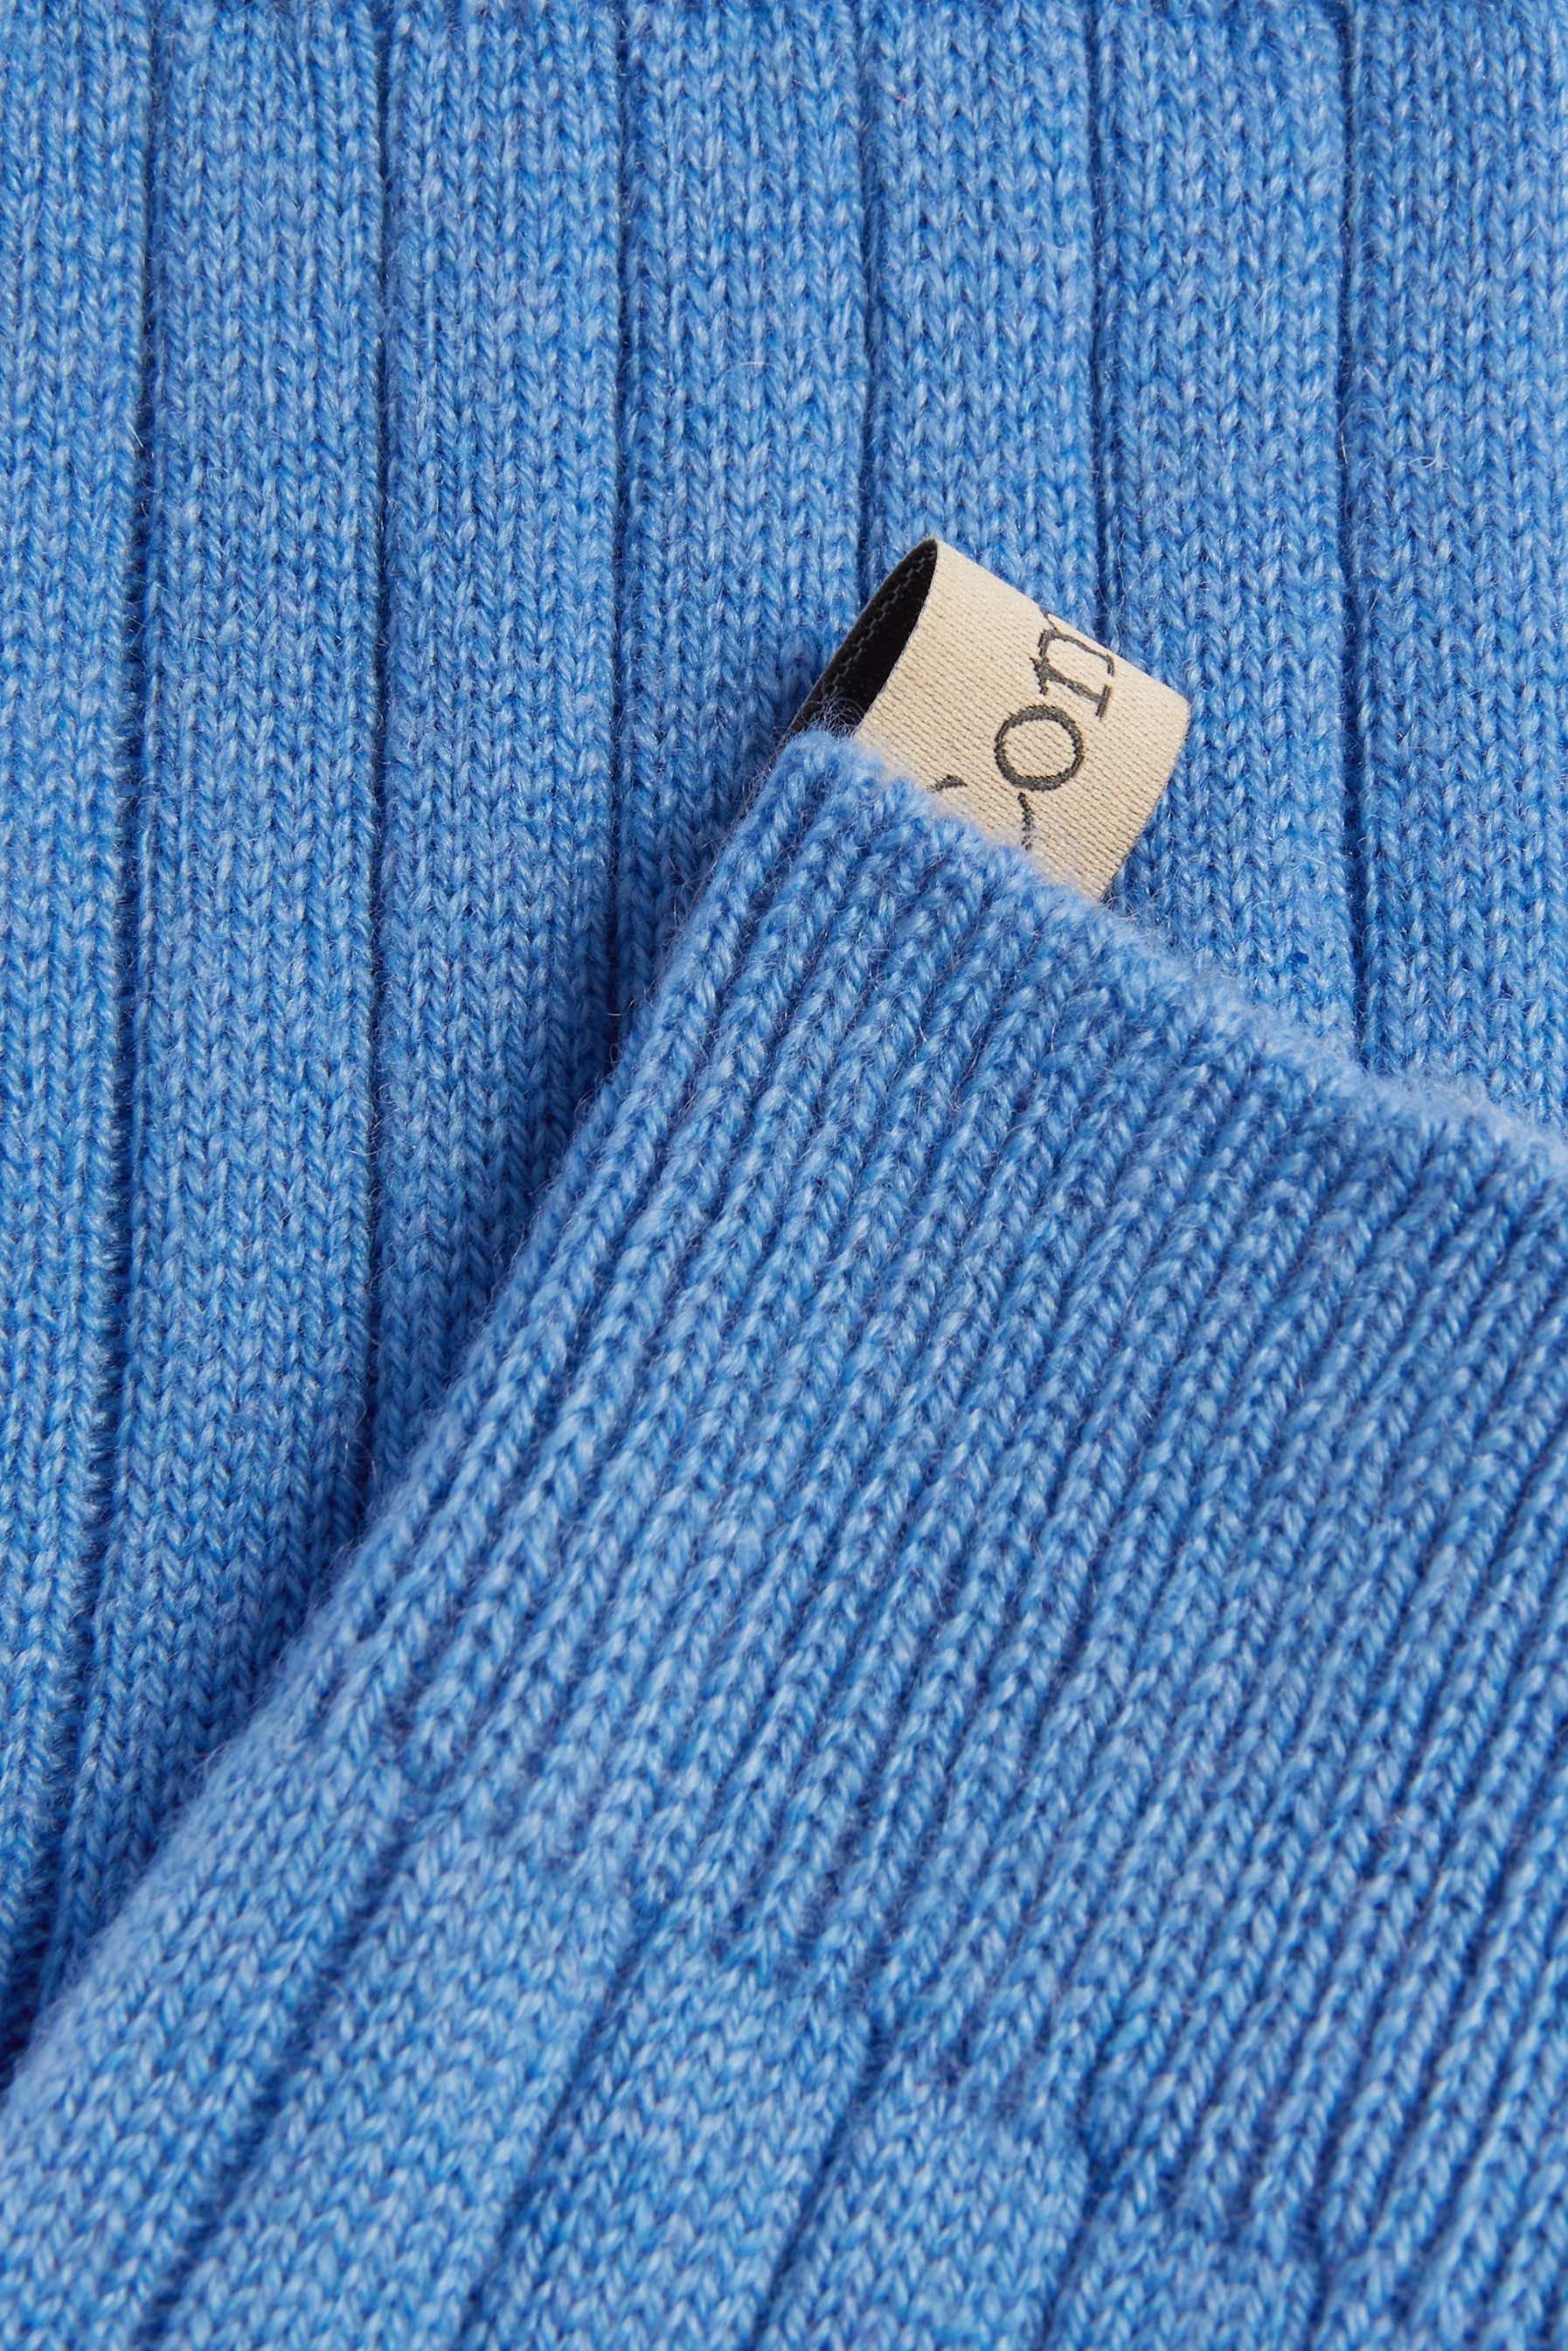 Ribbon tag detail, The Danielle Sock, Mongolian Cashmere, Sky Blue, Comme Si